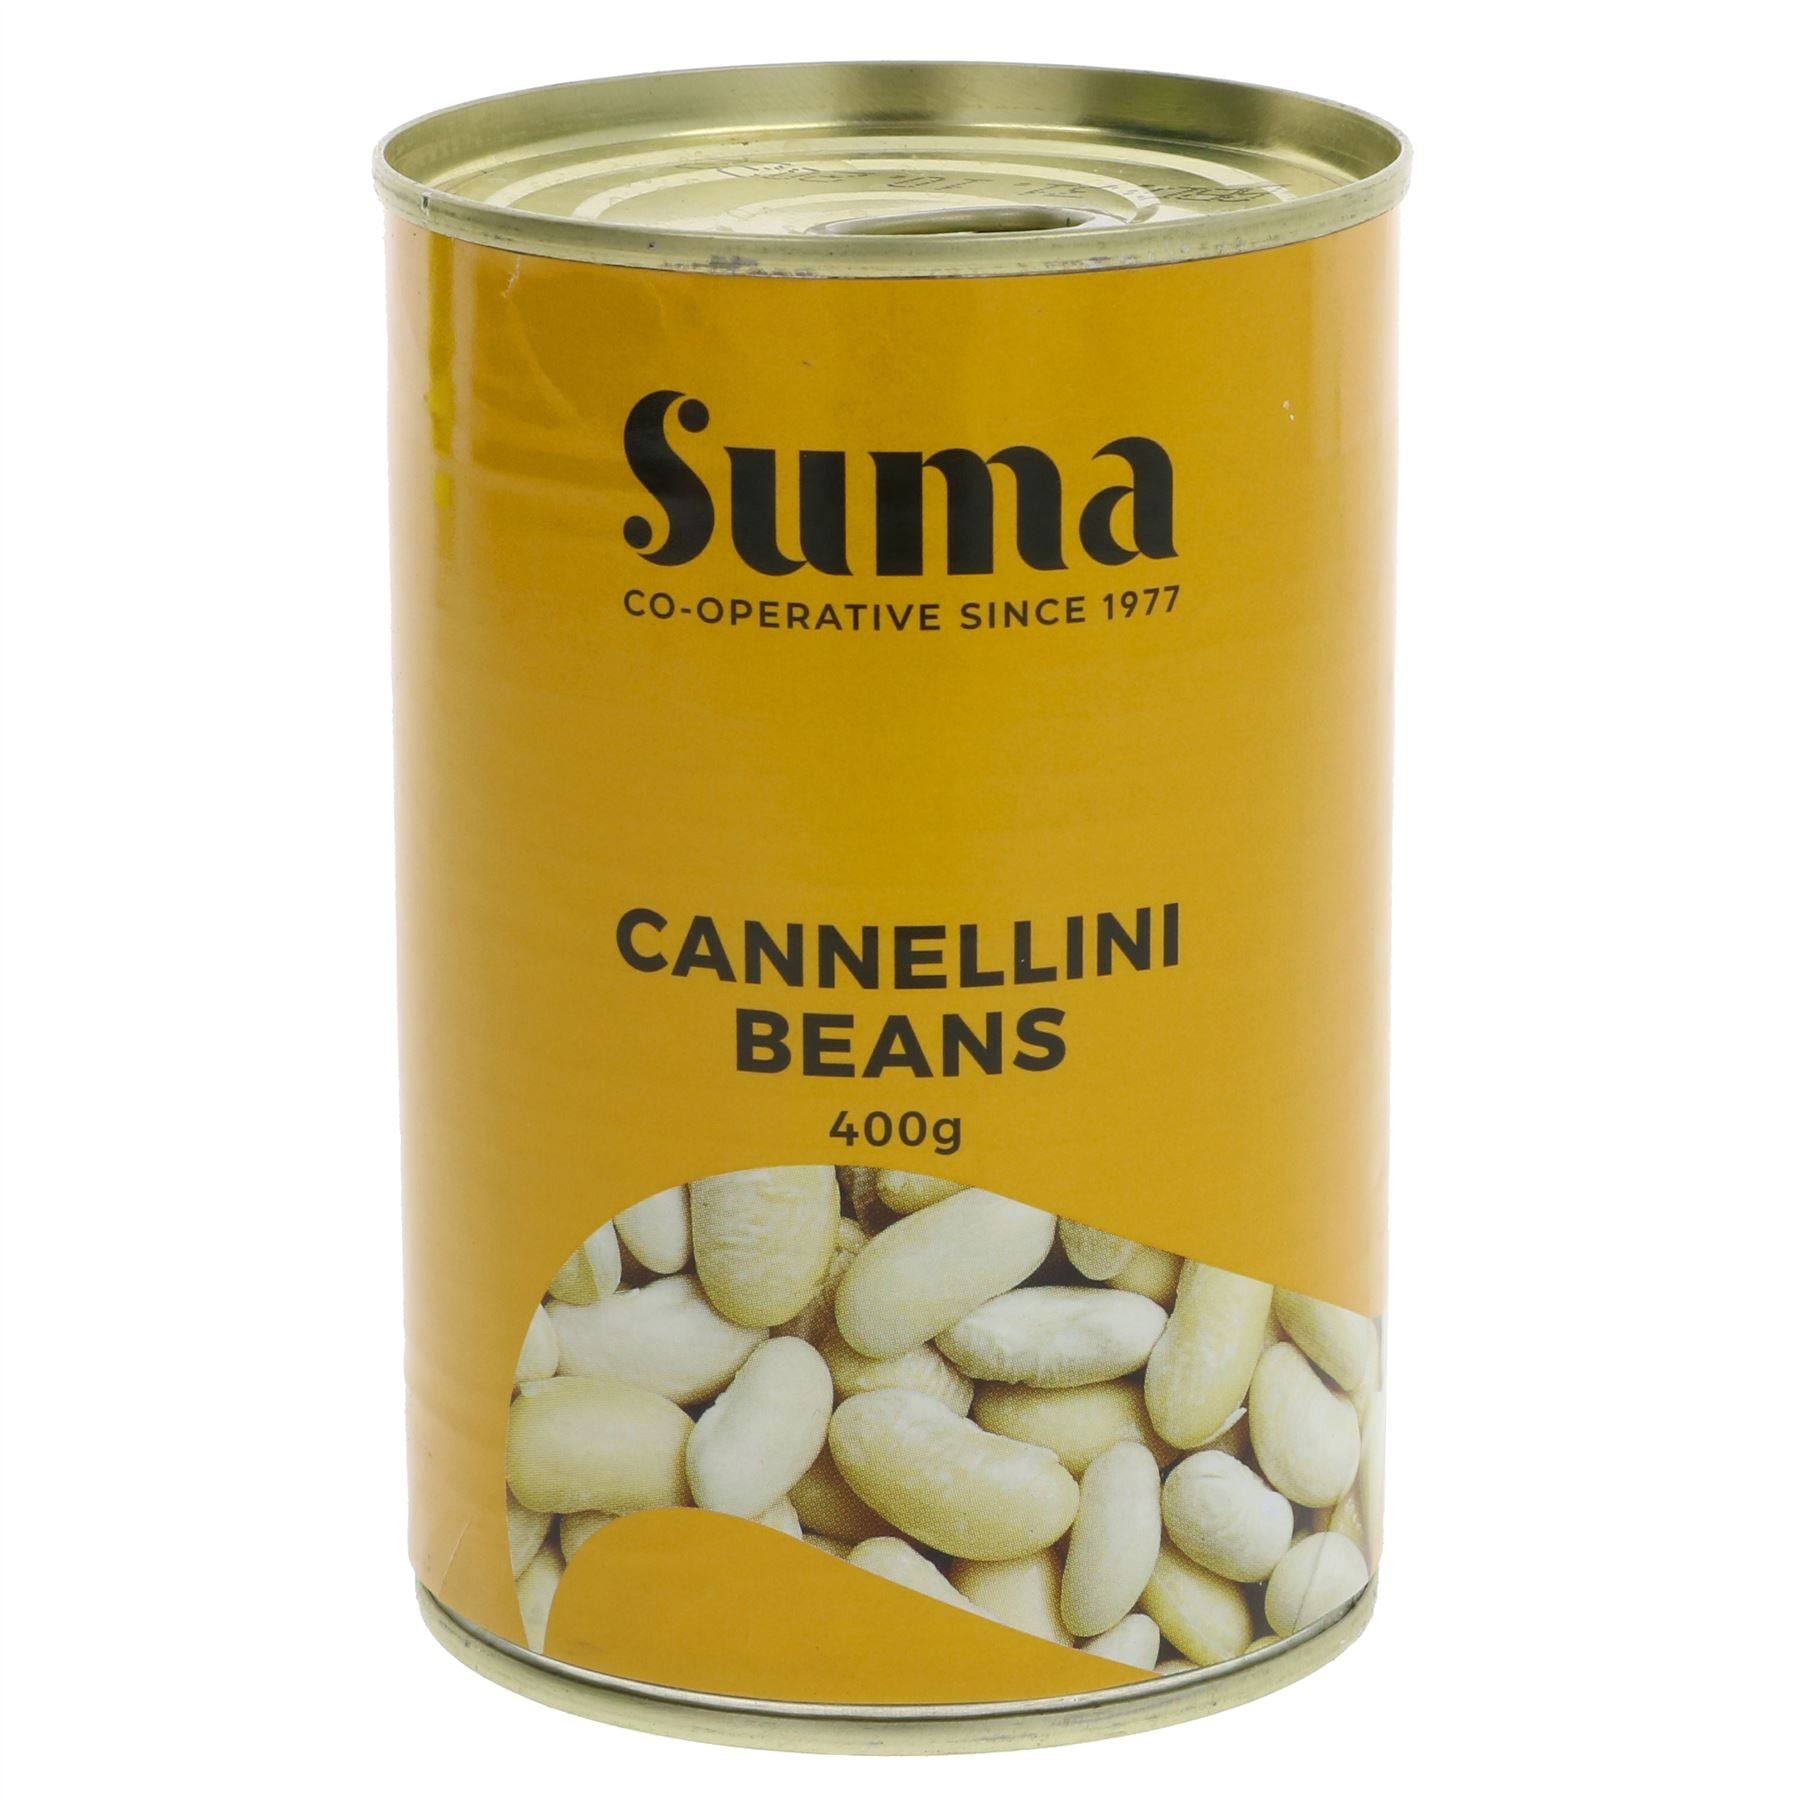 Suma Cannellini Beans - 400g